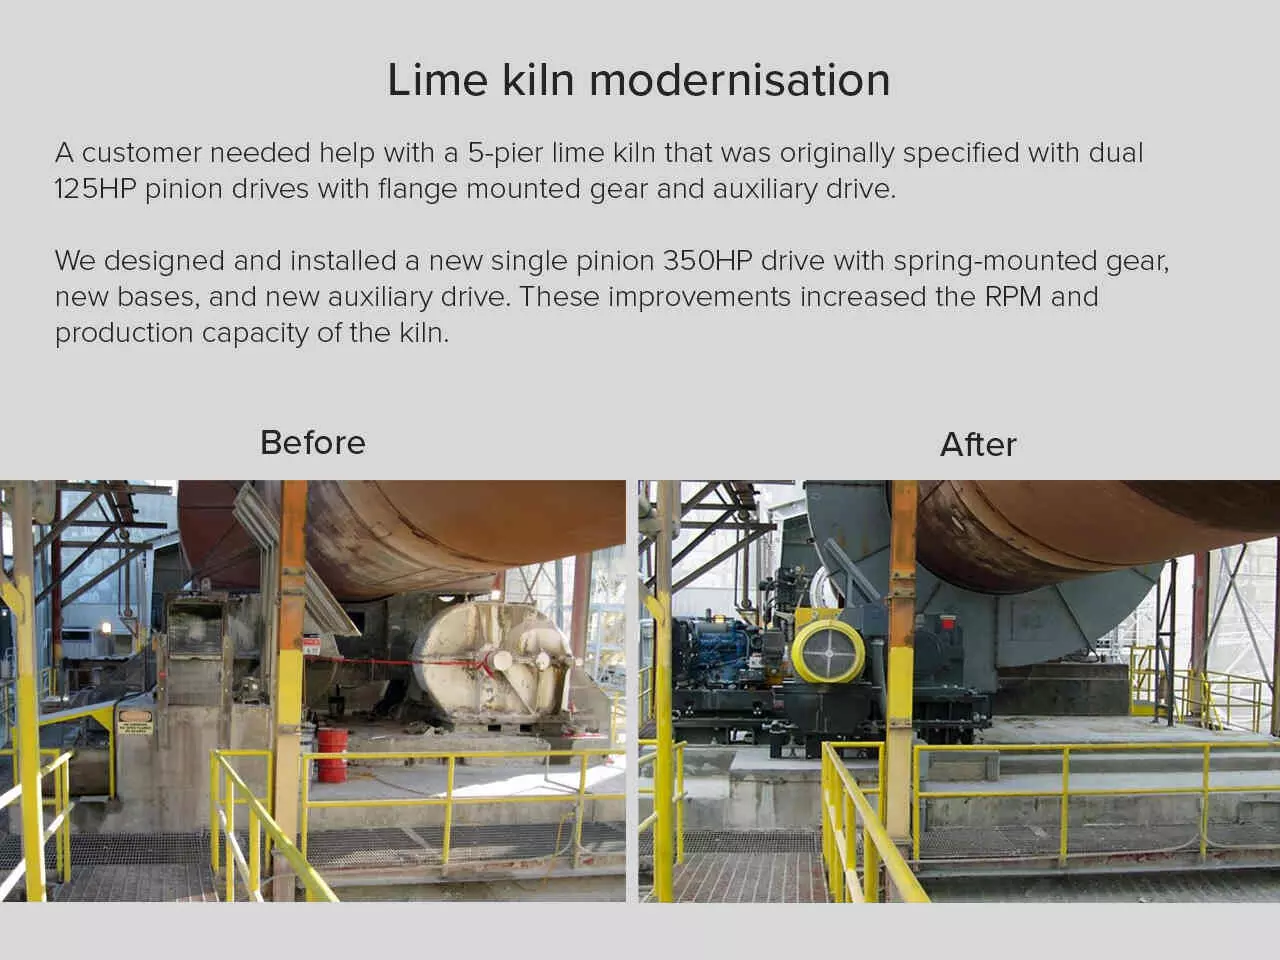 Kiln modernization - before and after